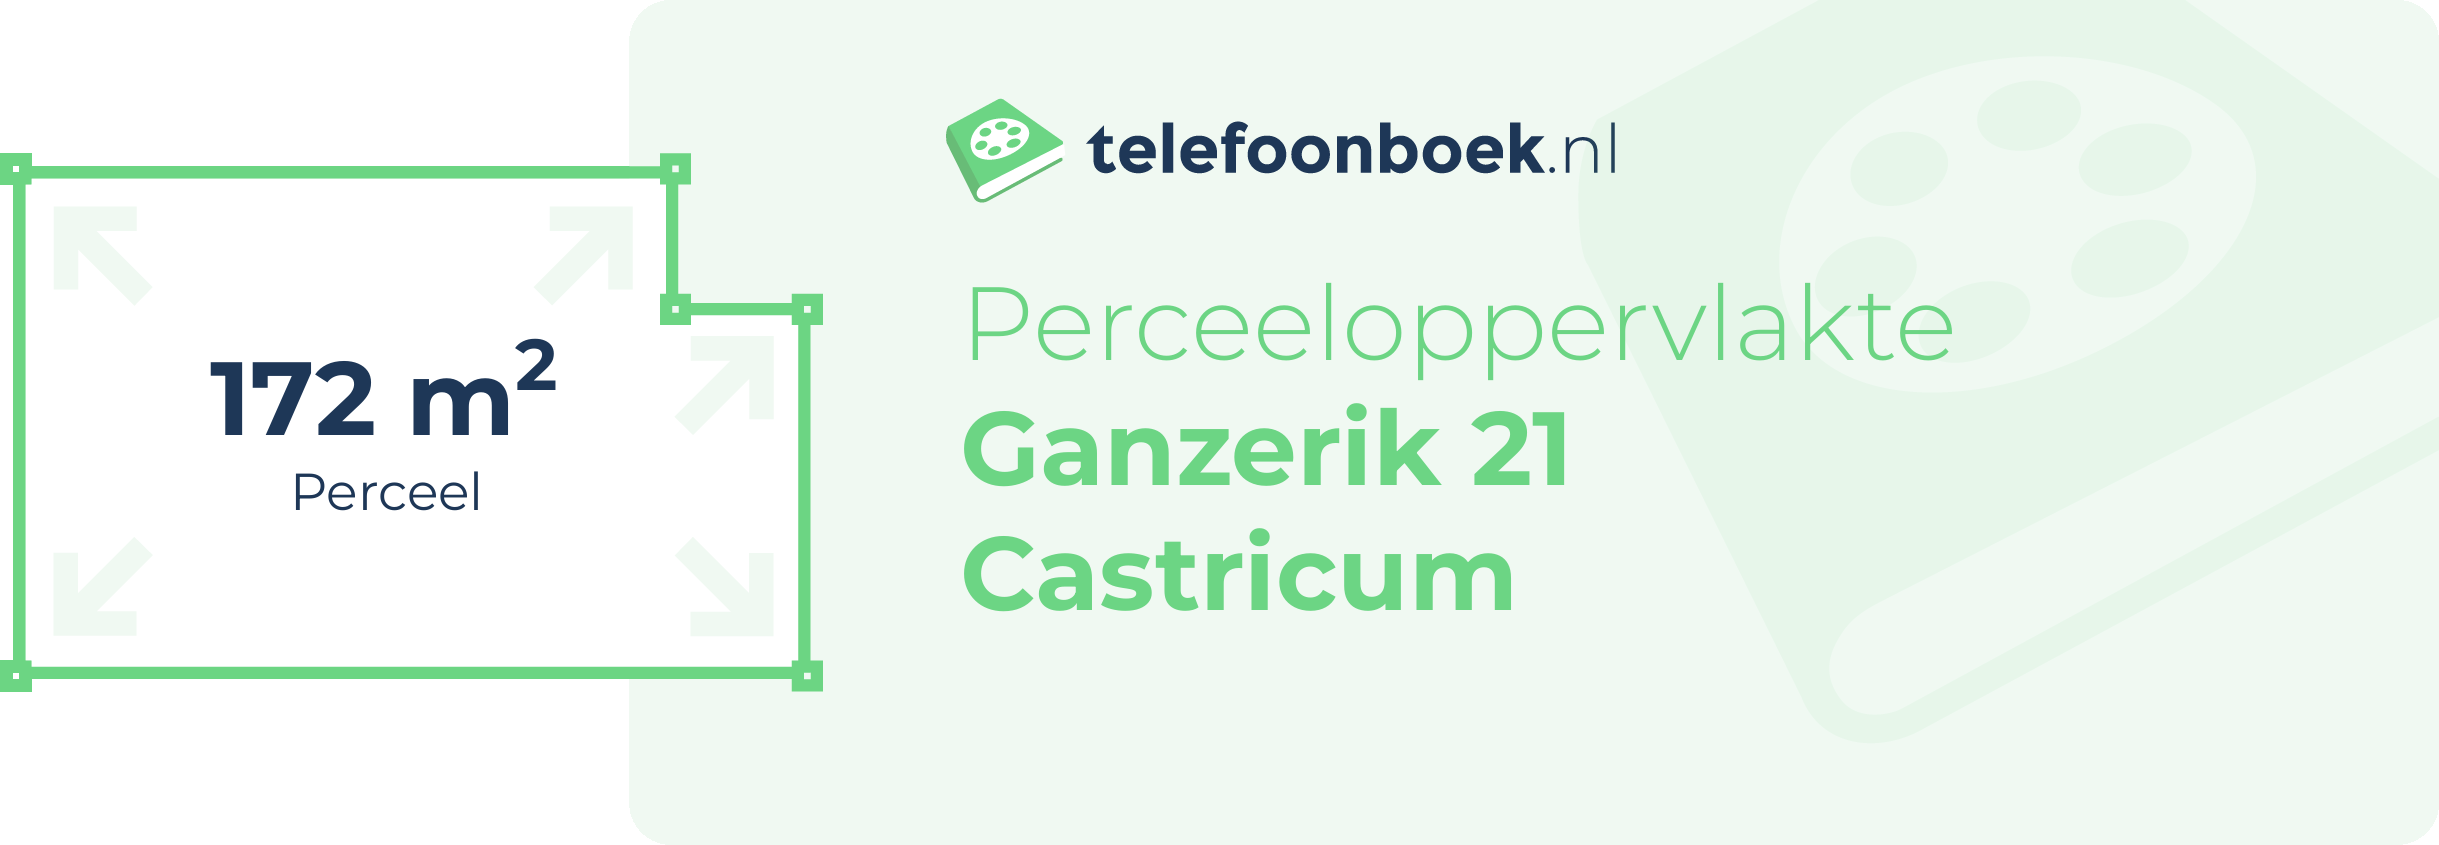 Perceeloppervlakte Ganzerik 21 Castricum